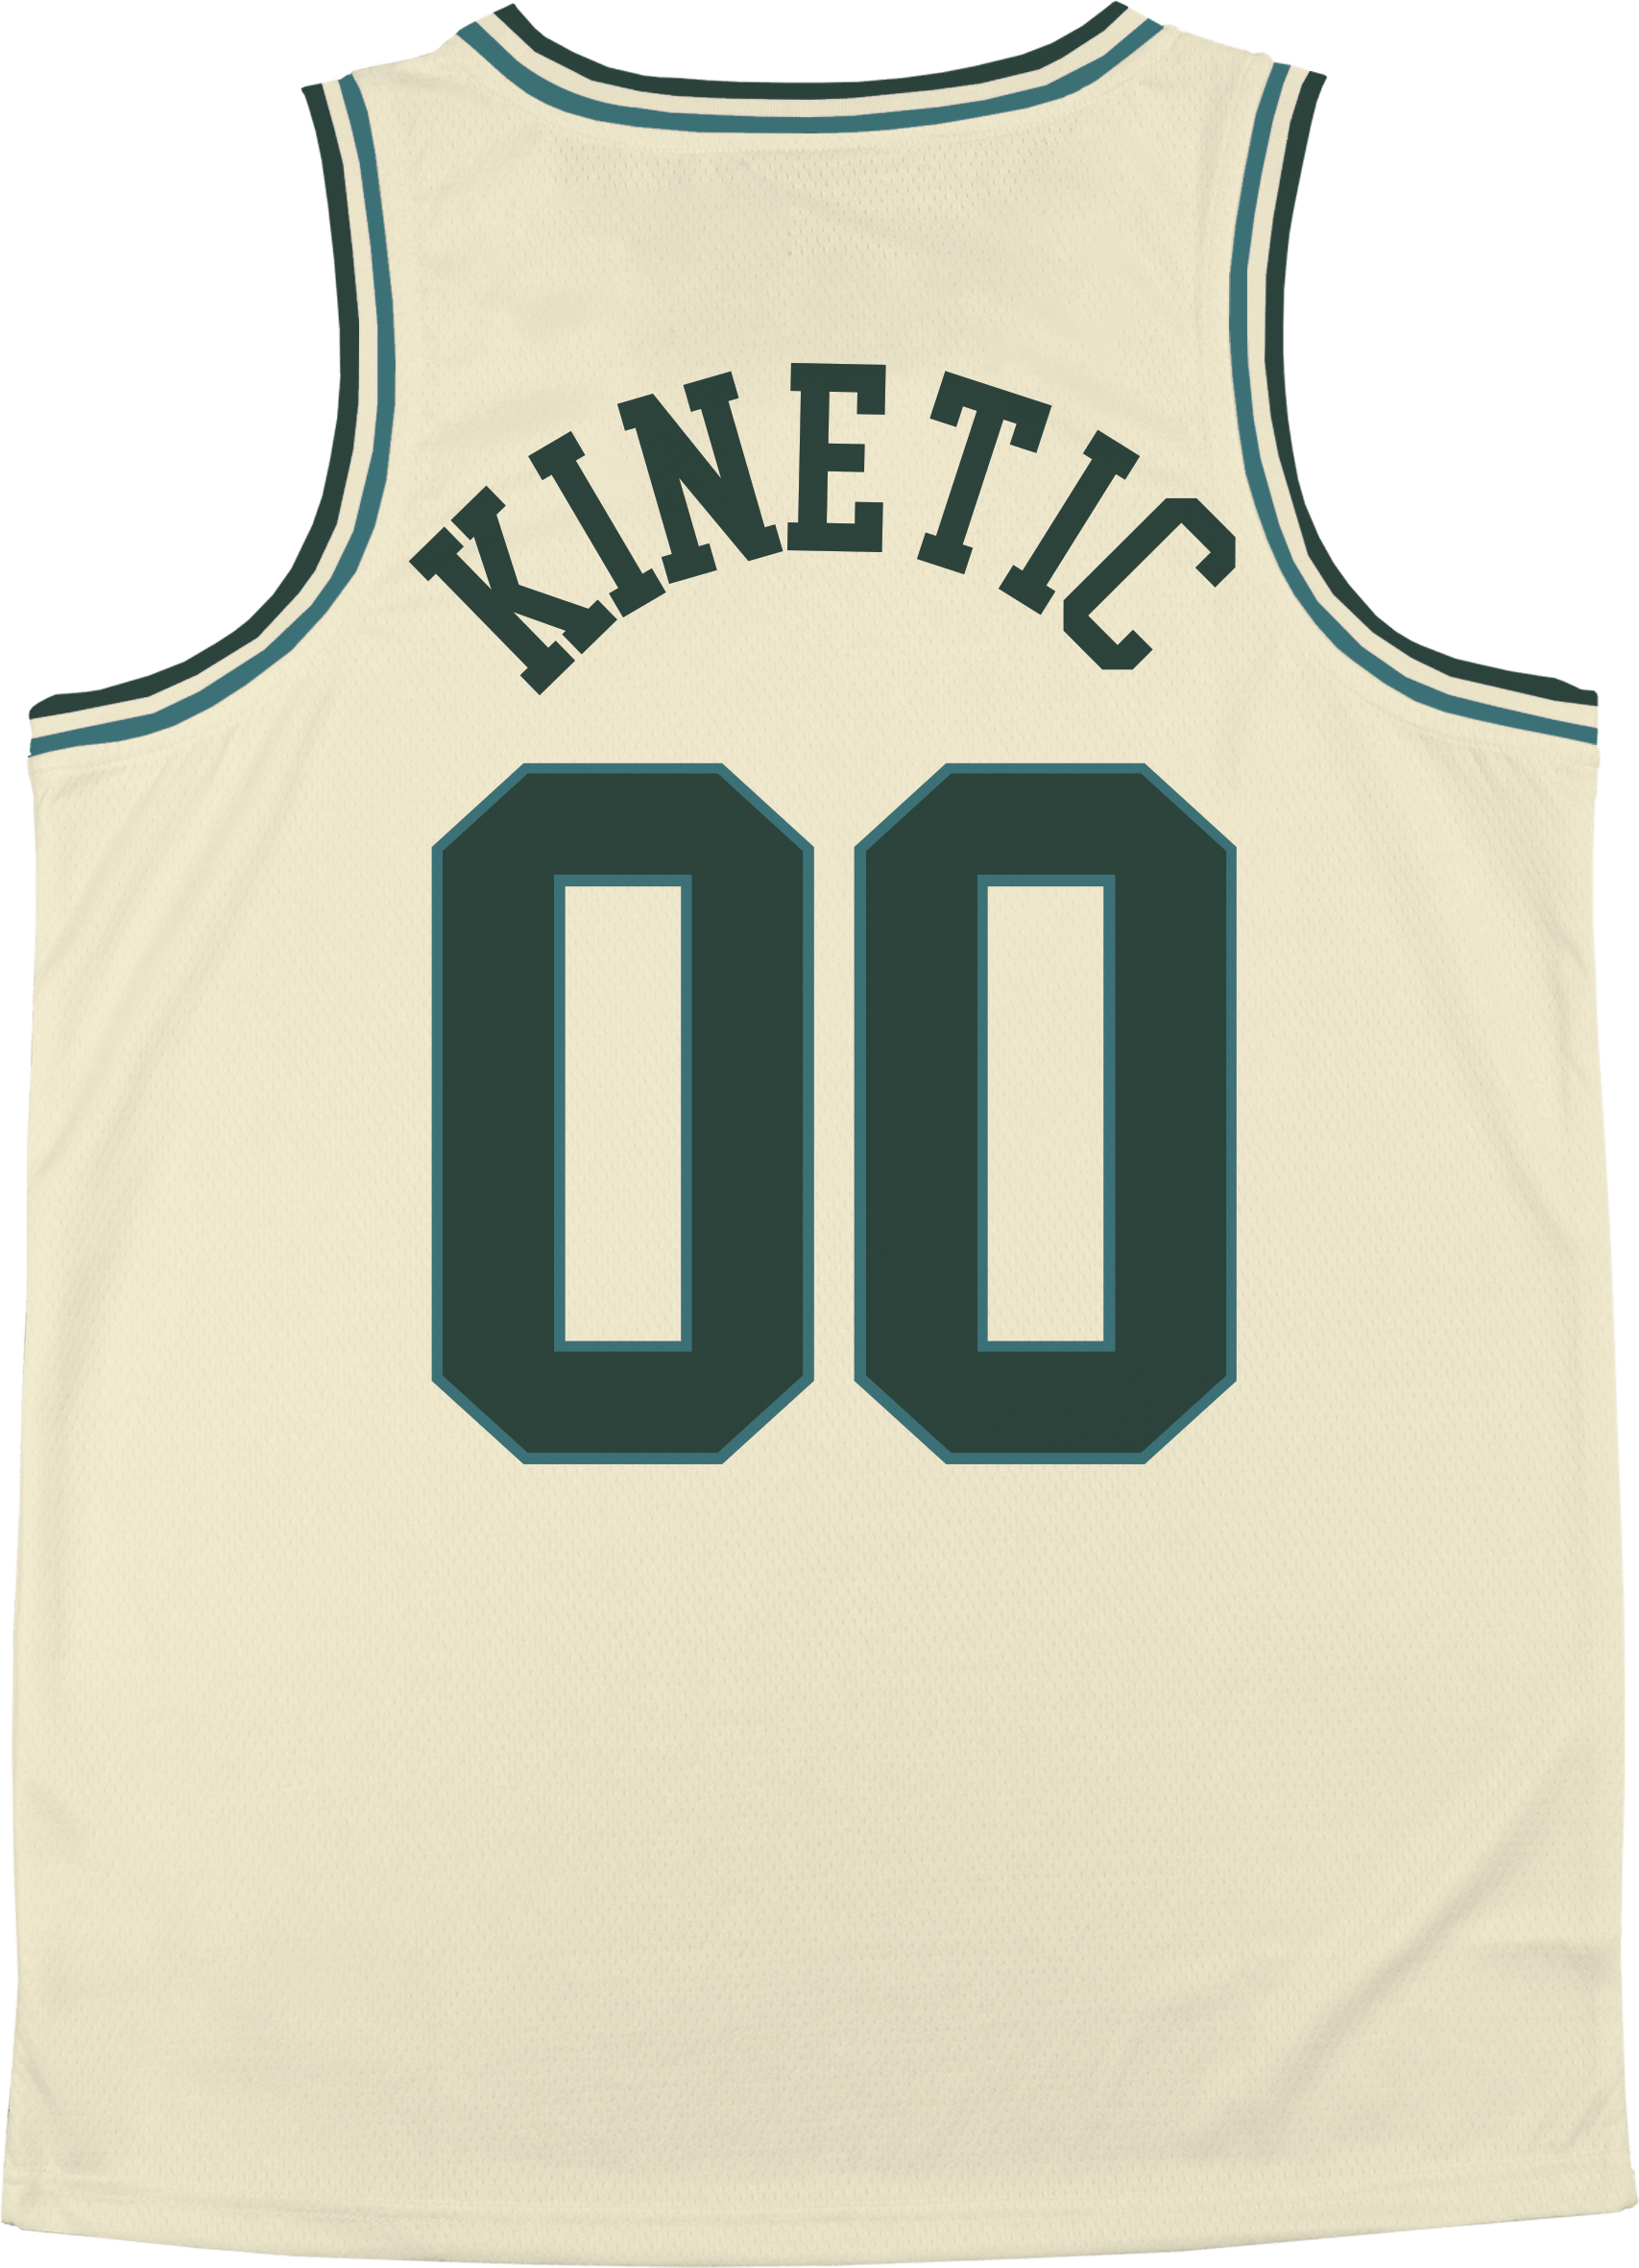 Pi Kappa Phi - Buttercream Basketball Jersey - Kinetic Society